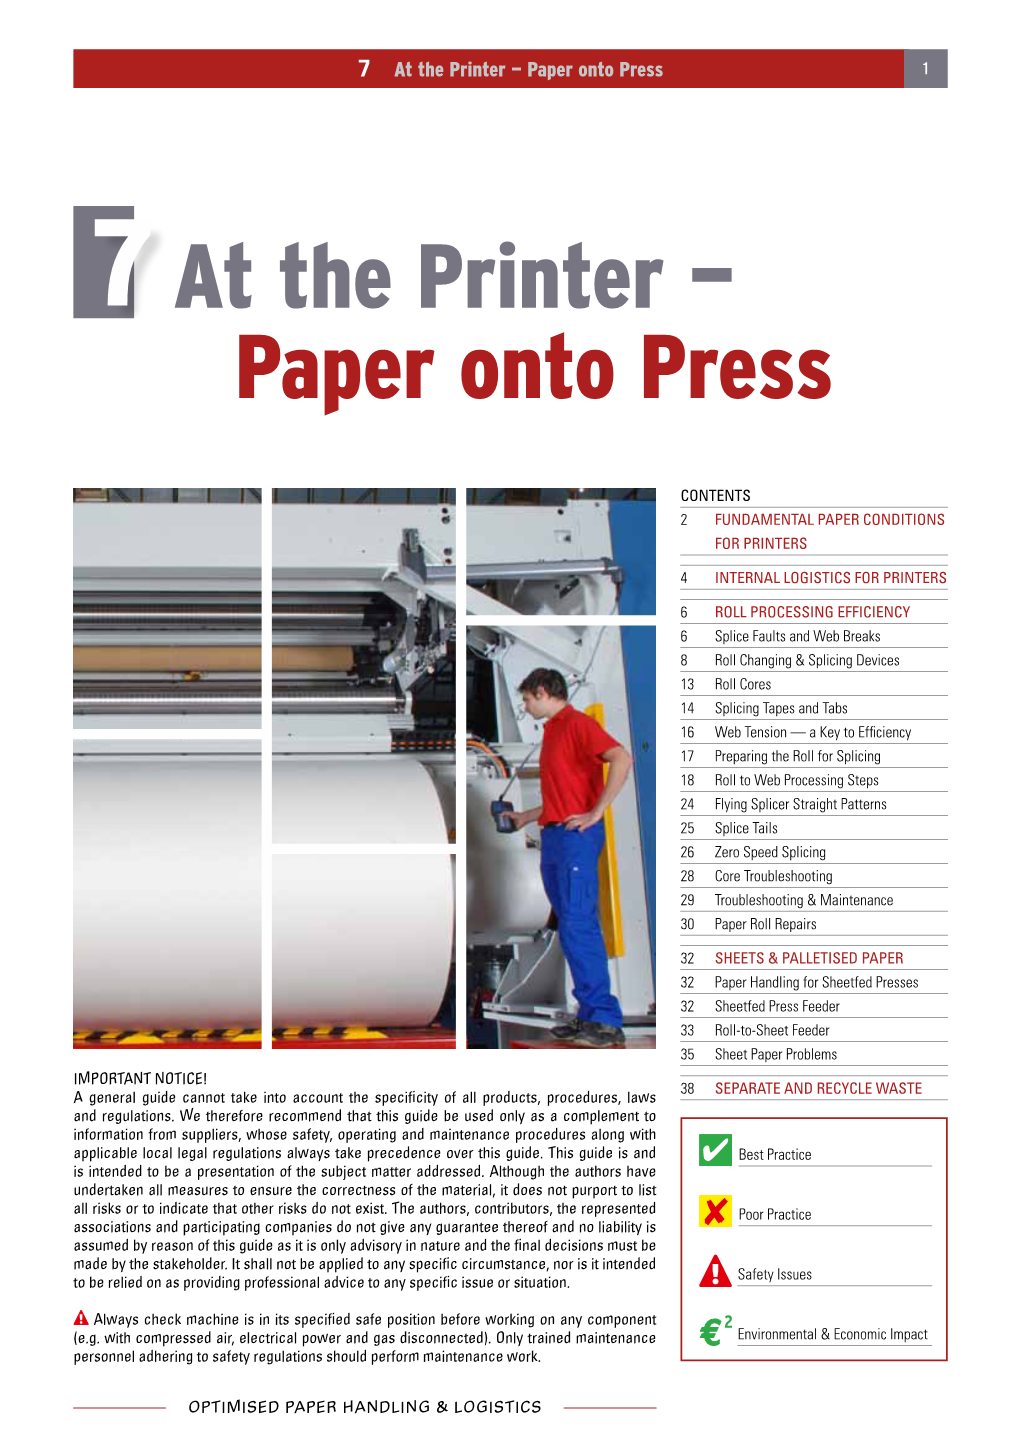 At the Printer — Paper Onto Press 1